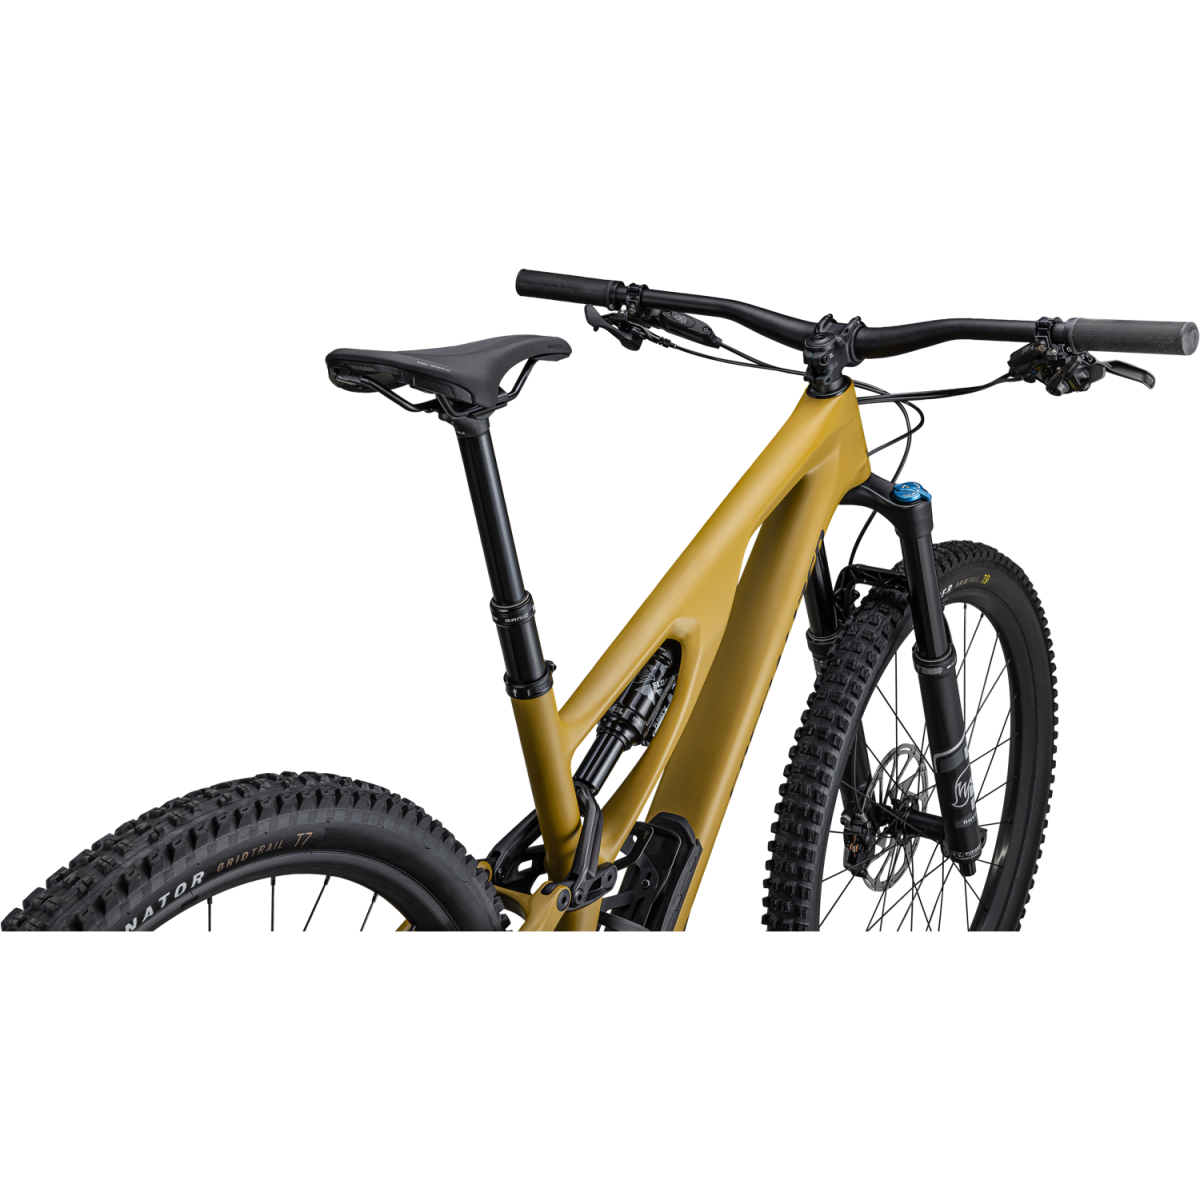 Specialized Stumpjumper Evo Comp kalnų dviratis / Satin Harvest Gold - Midnight Shadow